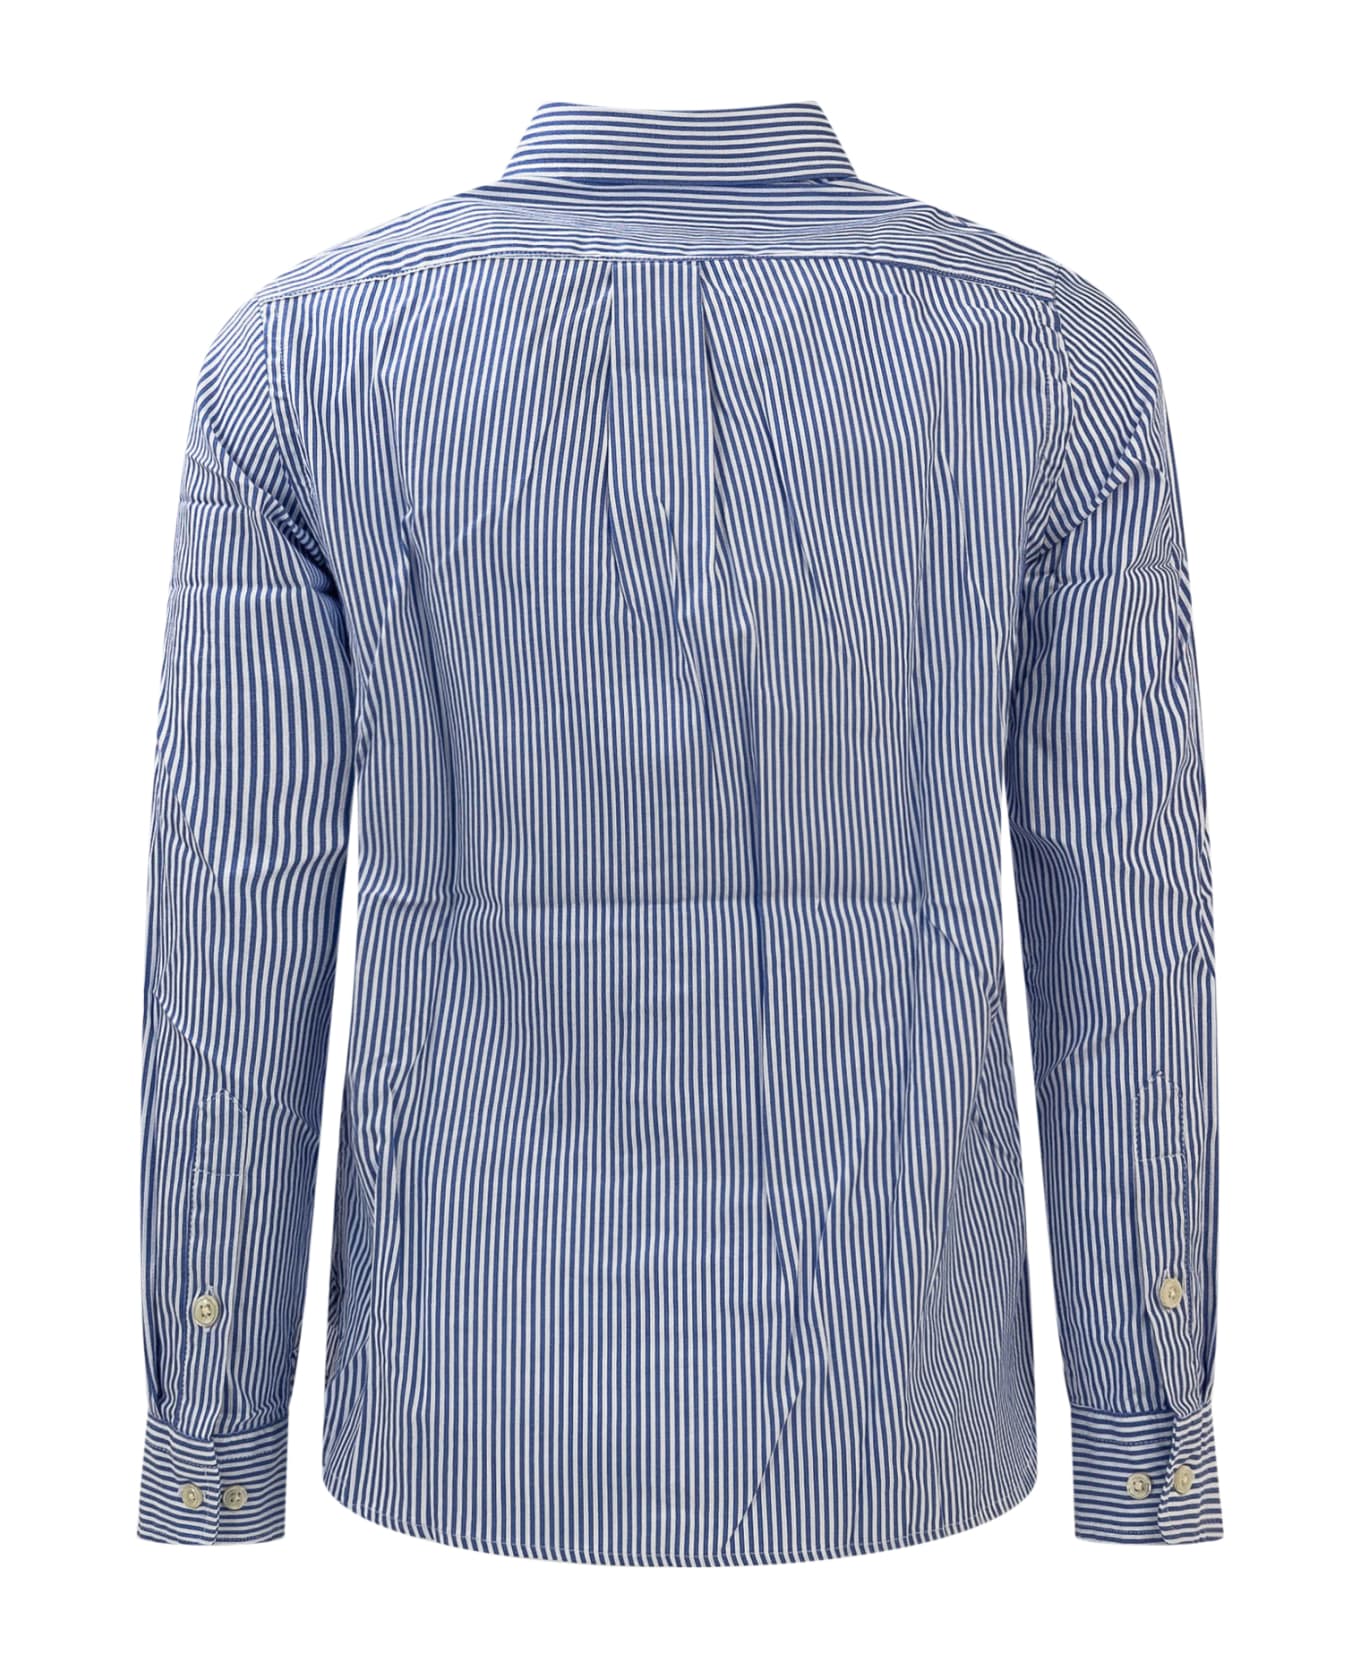 Polo Ralph Lauren Shirt With Logo - BSR BLUE/WHITE